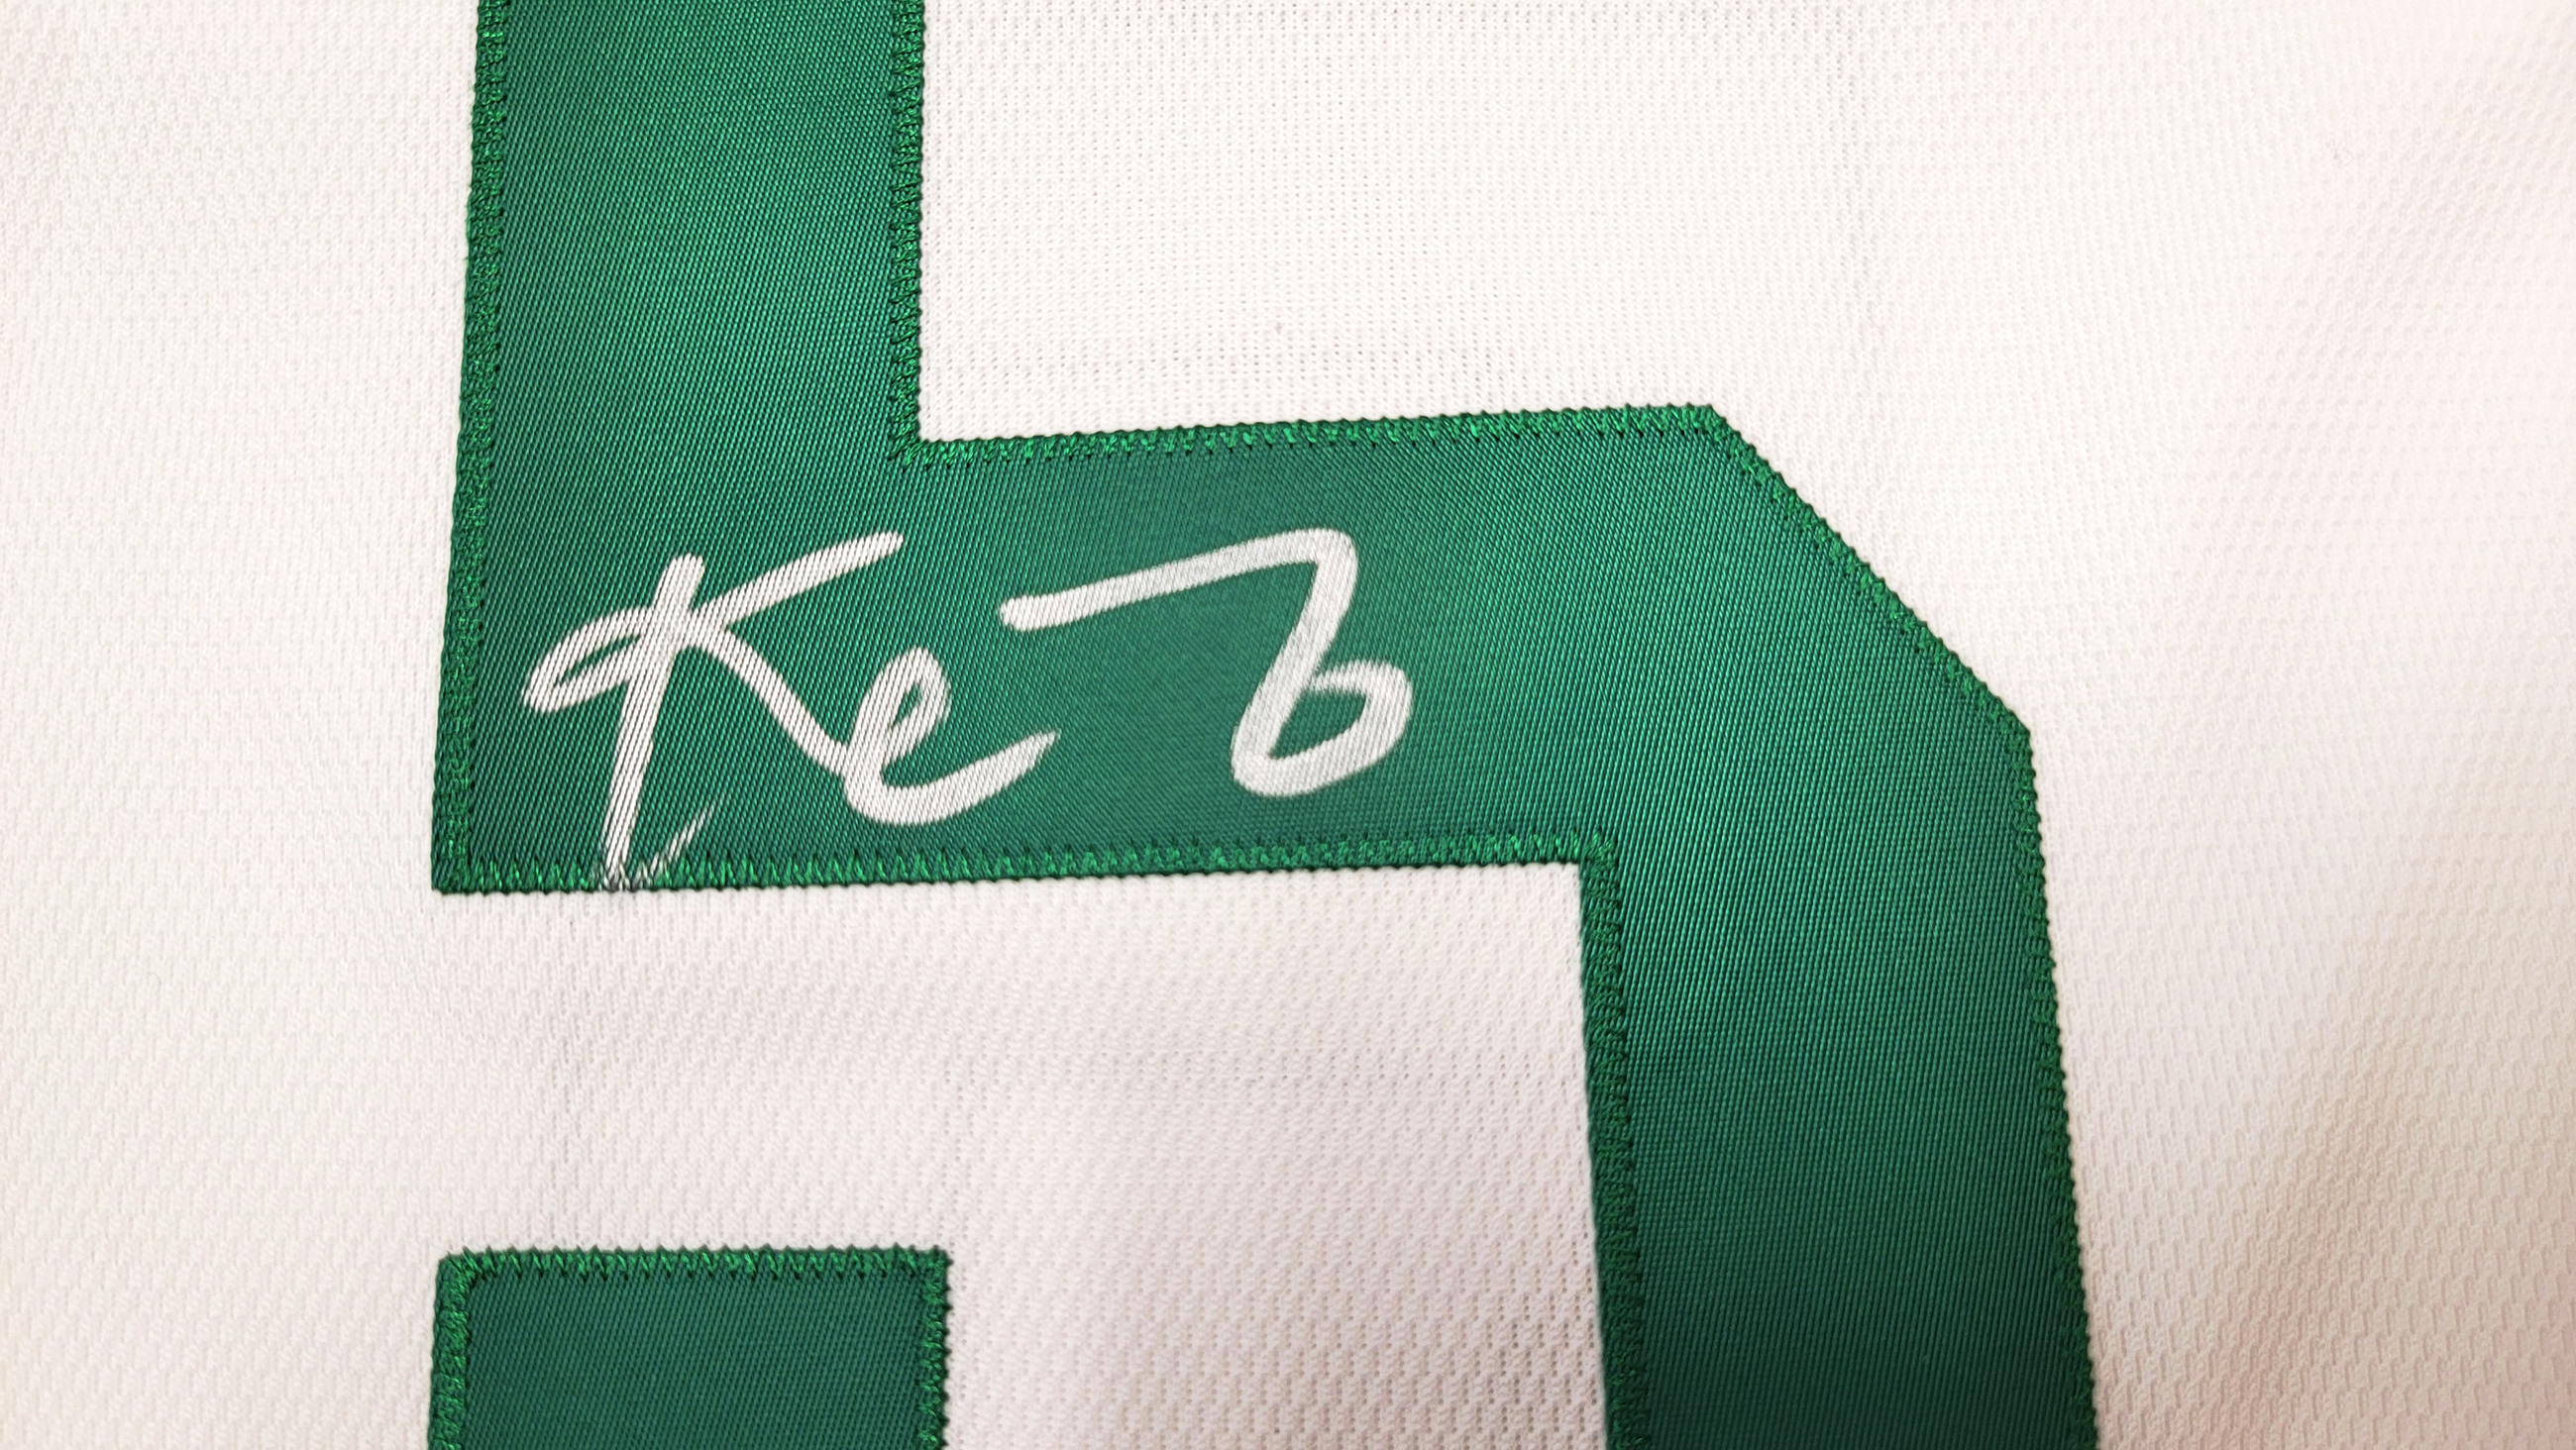 Boston Celtics Kevin Garnett Autographed White Mitchell & Ness 2007-08  Hardwood Classics NBA Finals Patch Jersey Size M Beckett BAS Witness  #WV46223